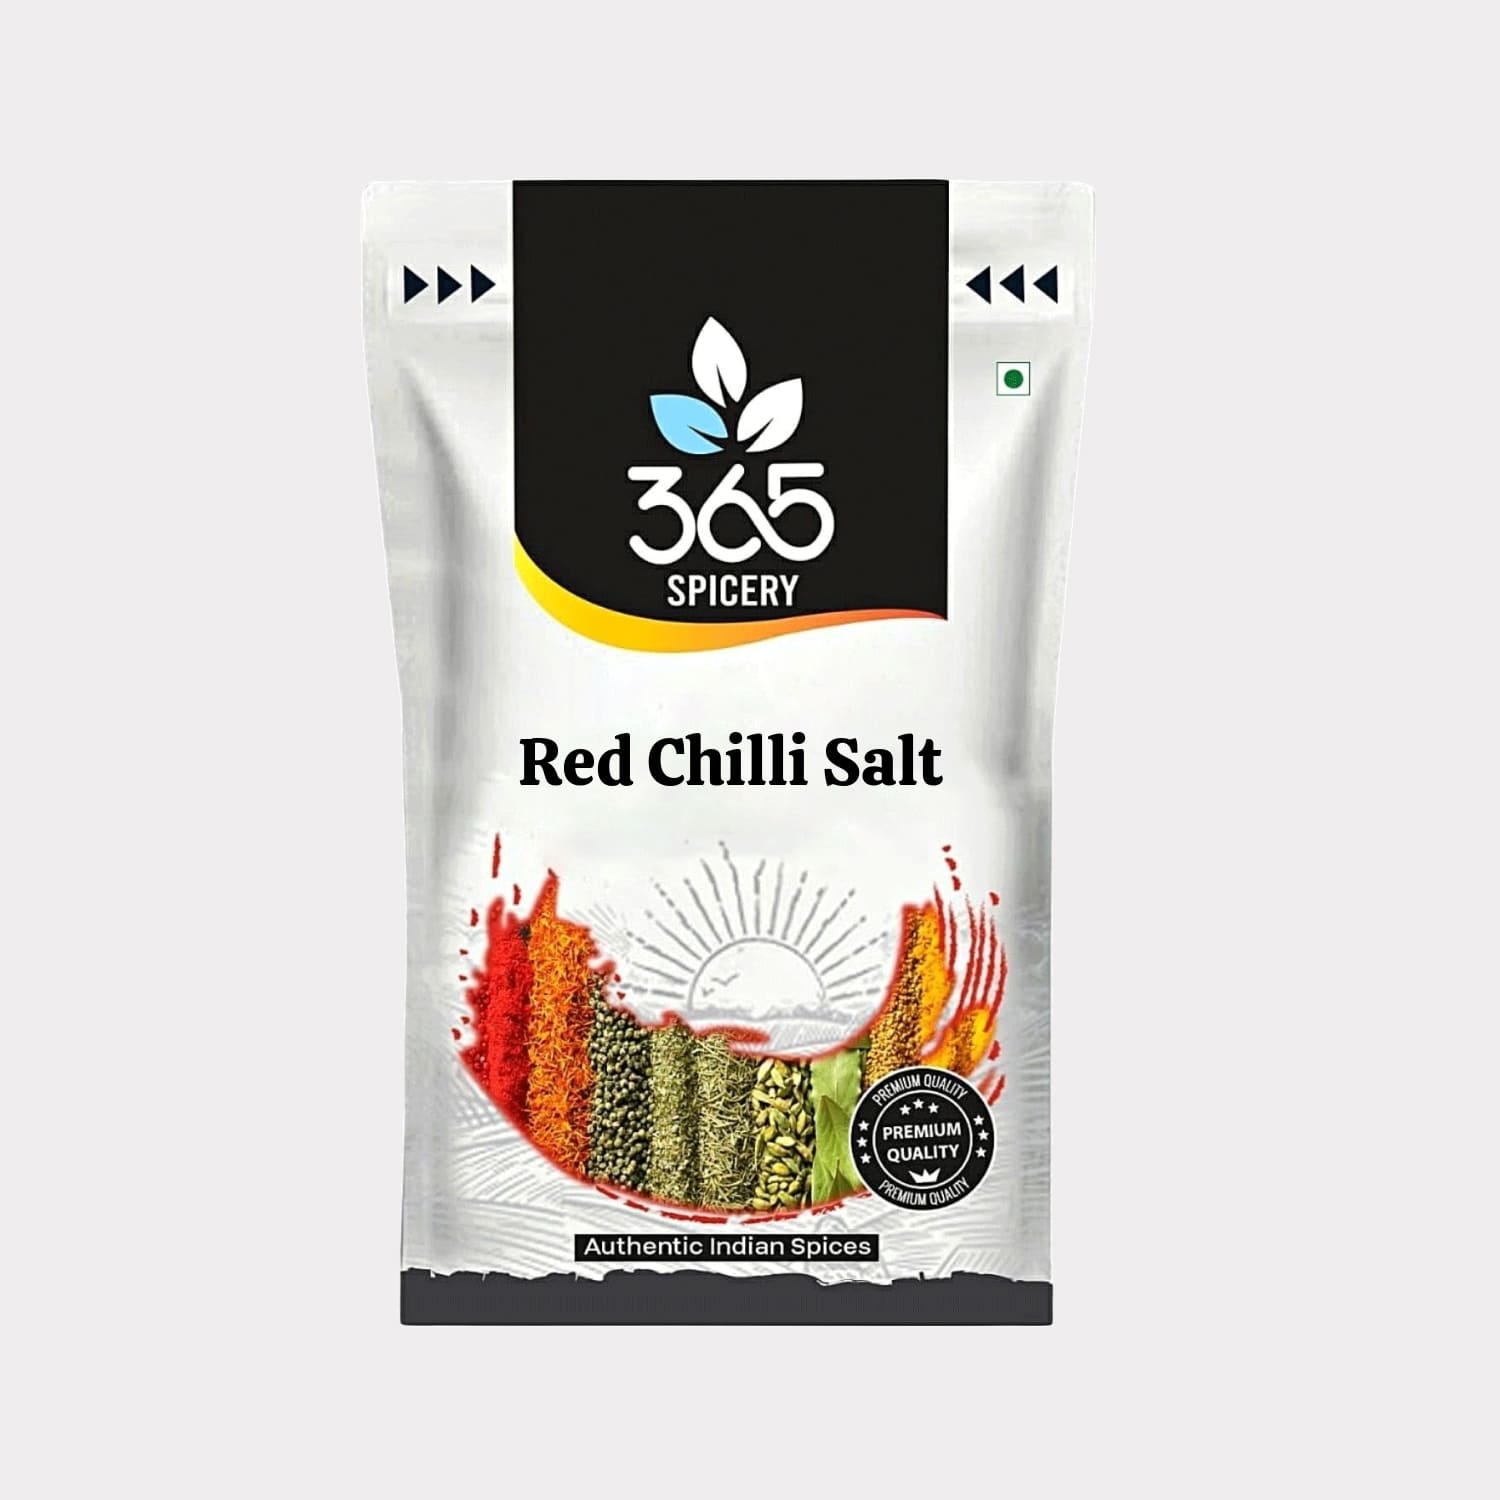 Red Chilli Salt